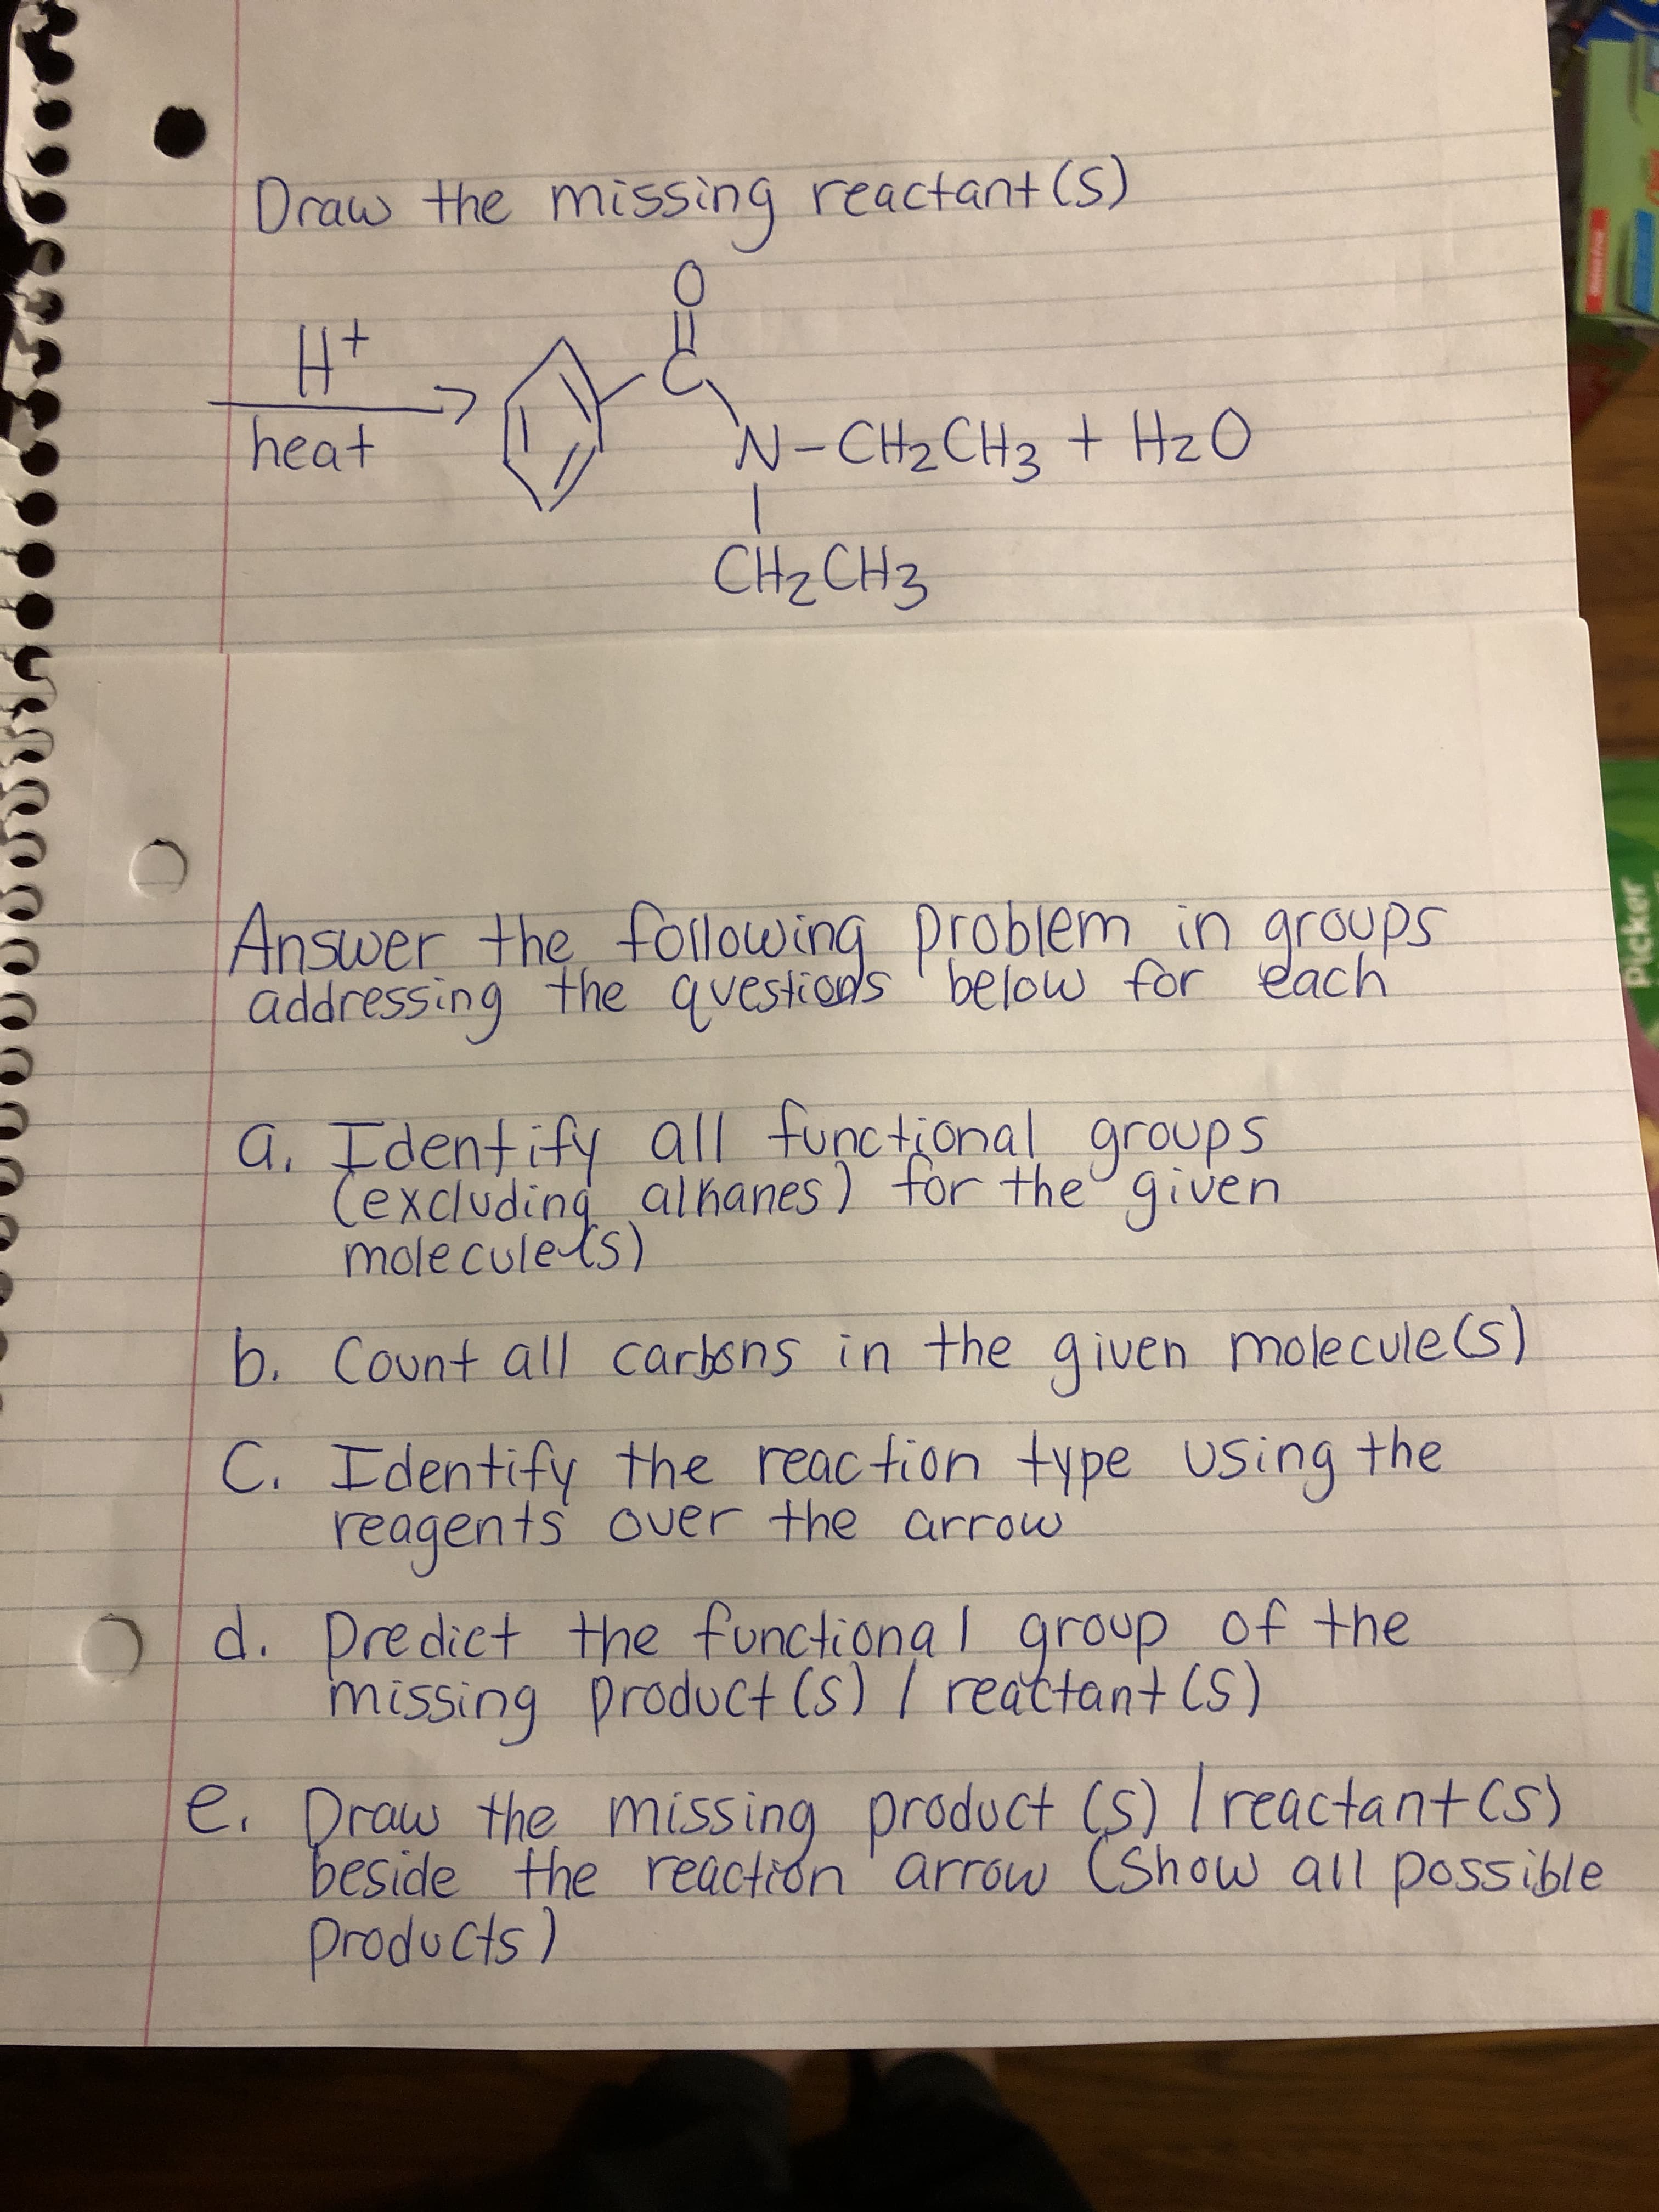 Draw the missing reactant(S)
士
heat
N-CH2CH2 + HzO
CHz CH3
